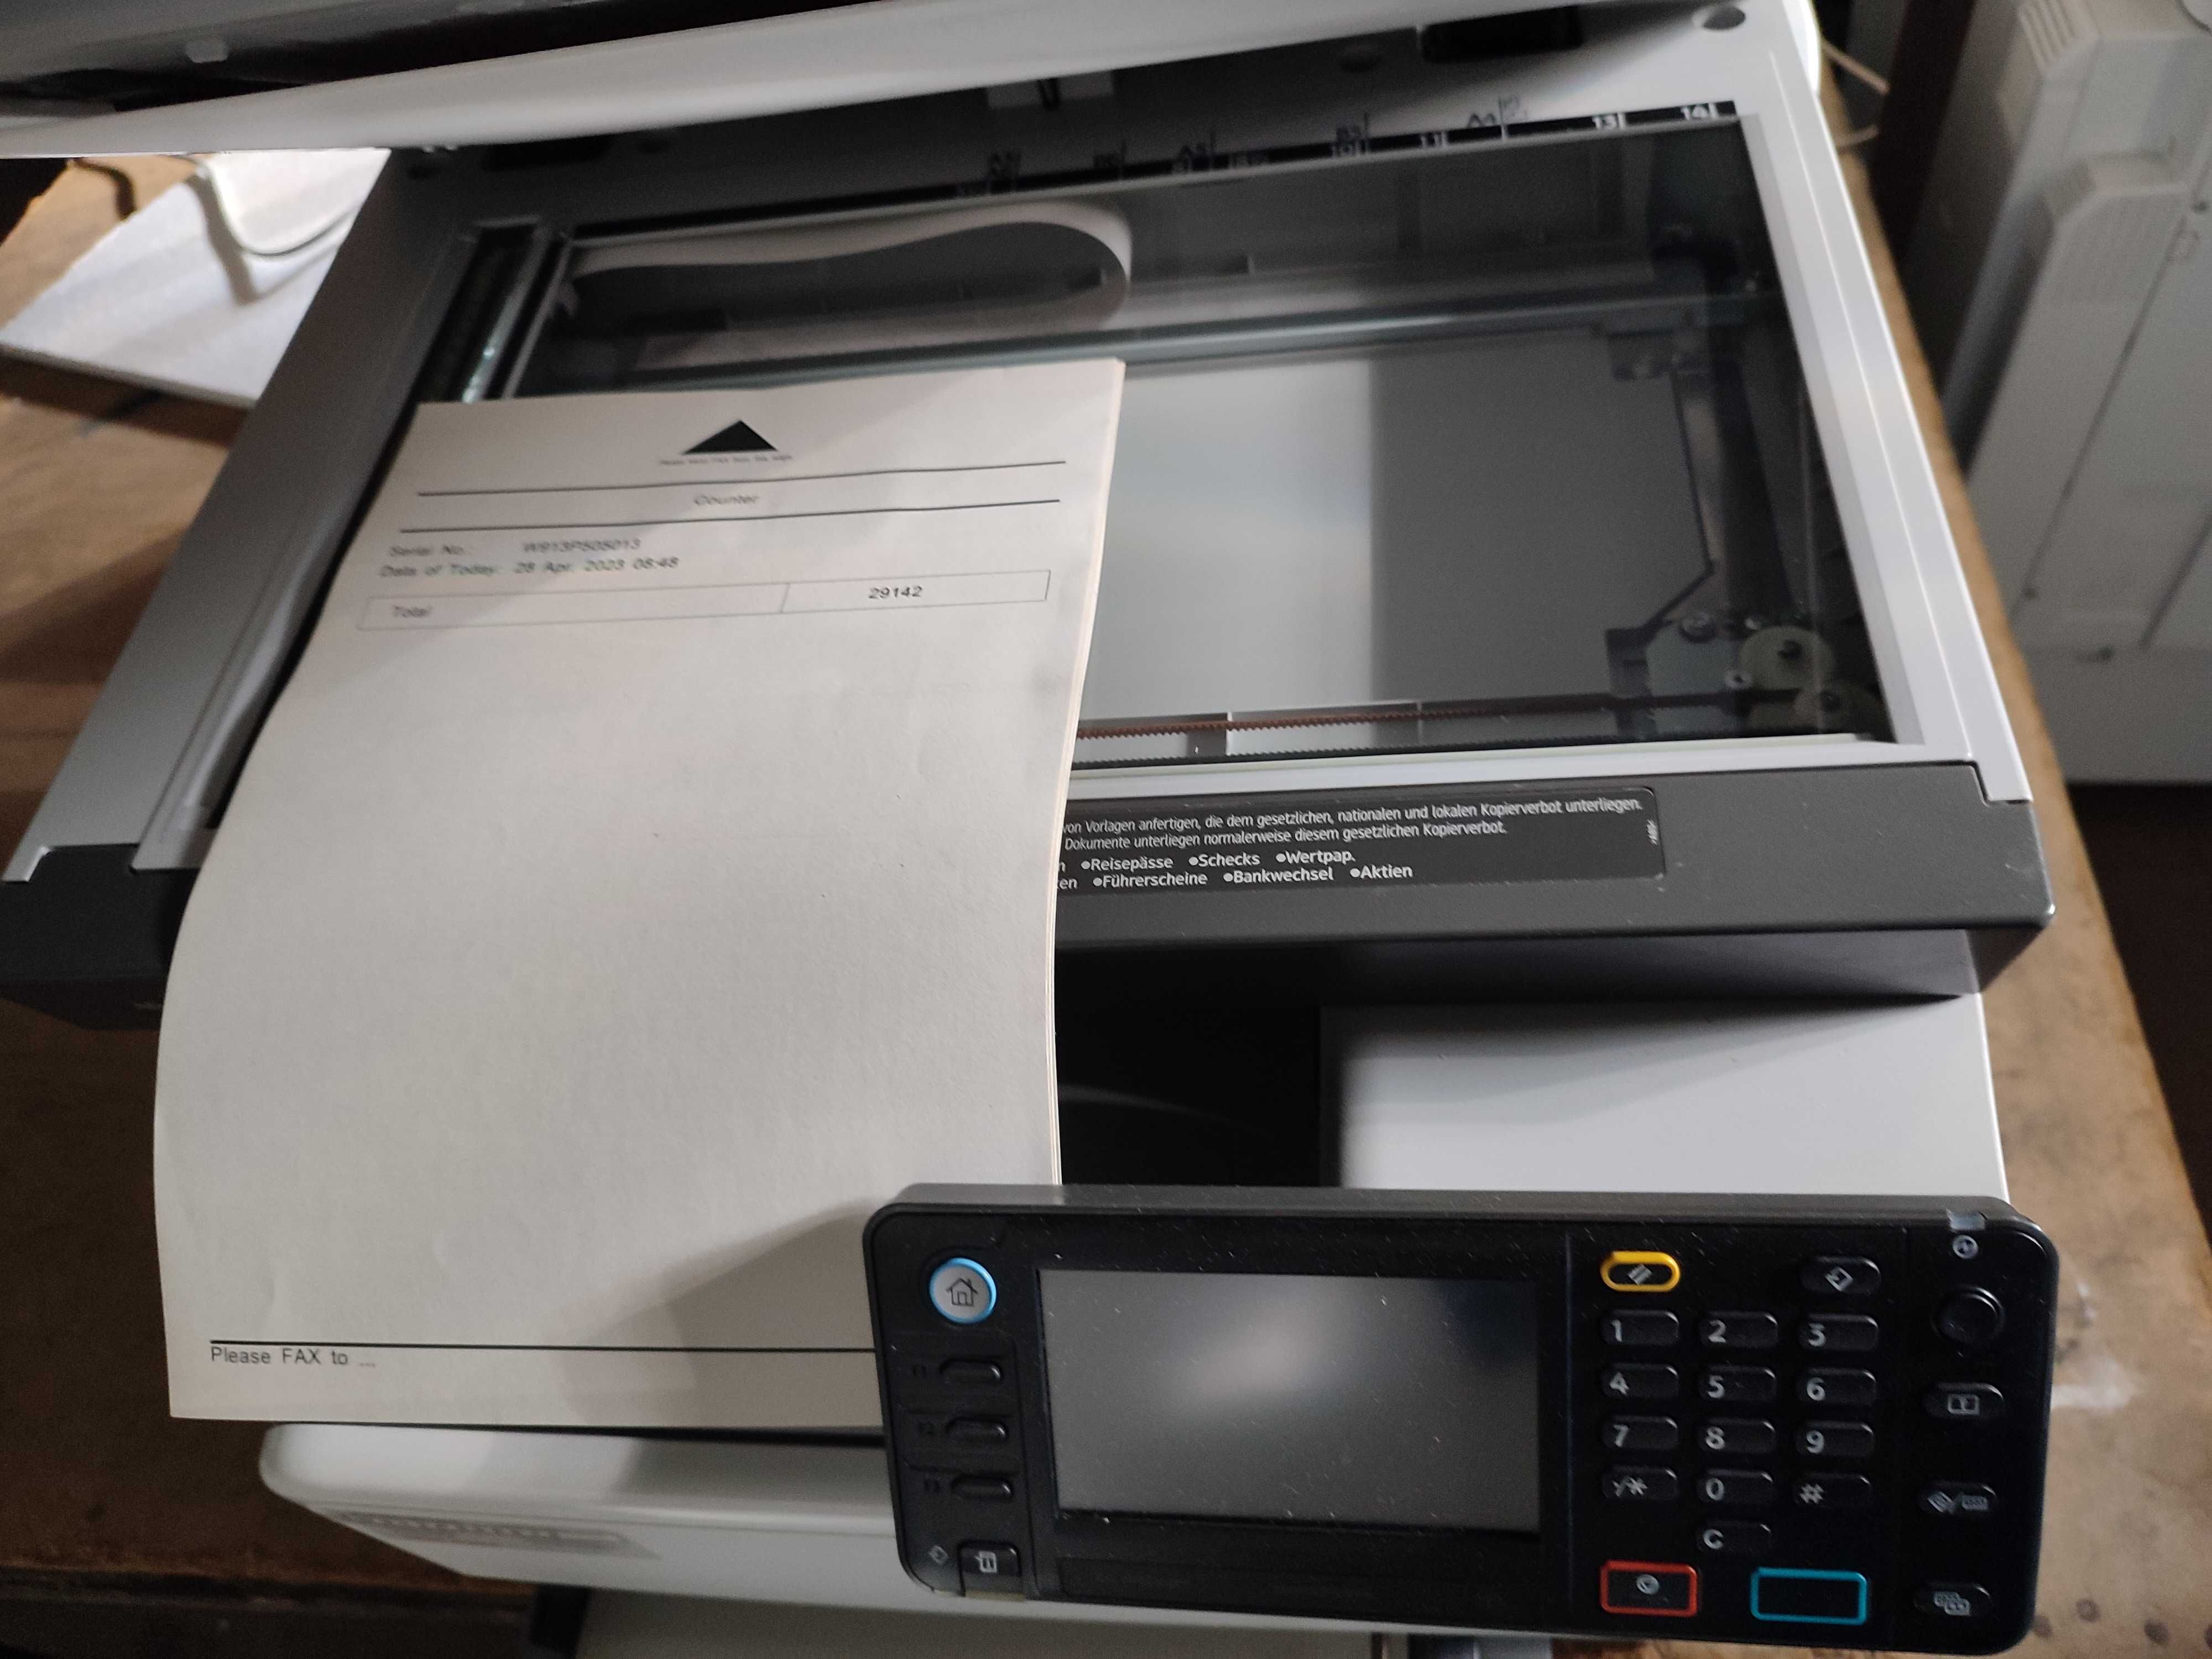 kserokopiarka drukarka a4 mono wielofunkcyjna Ricoh mp301spf okazja